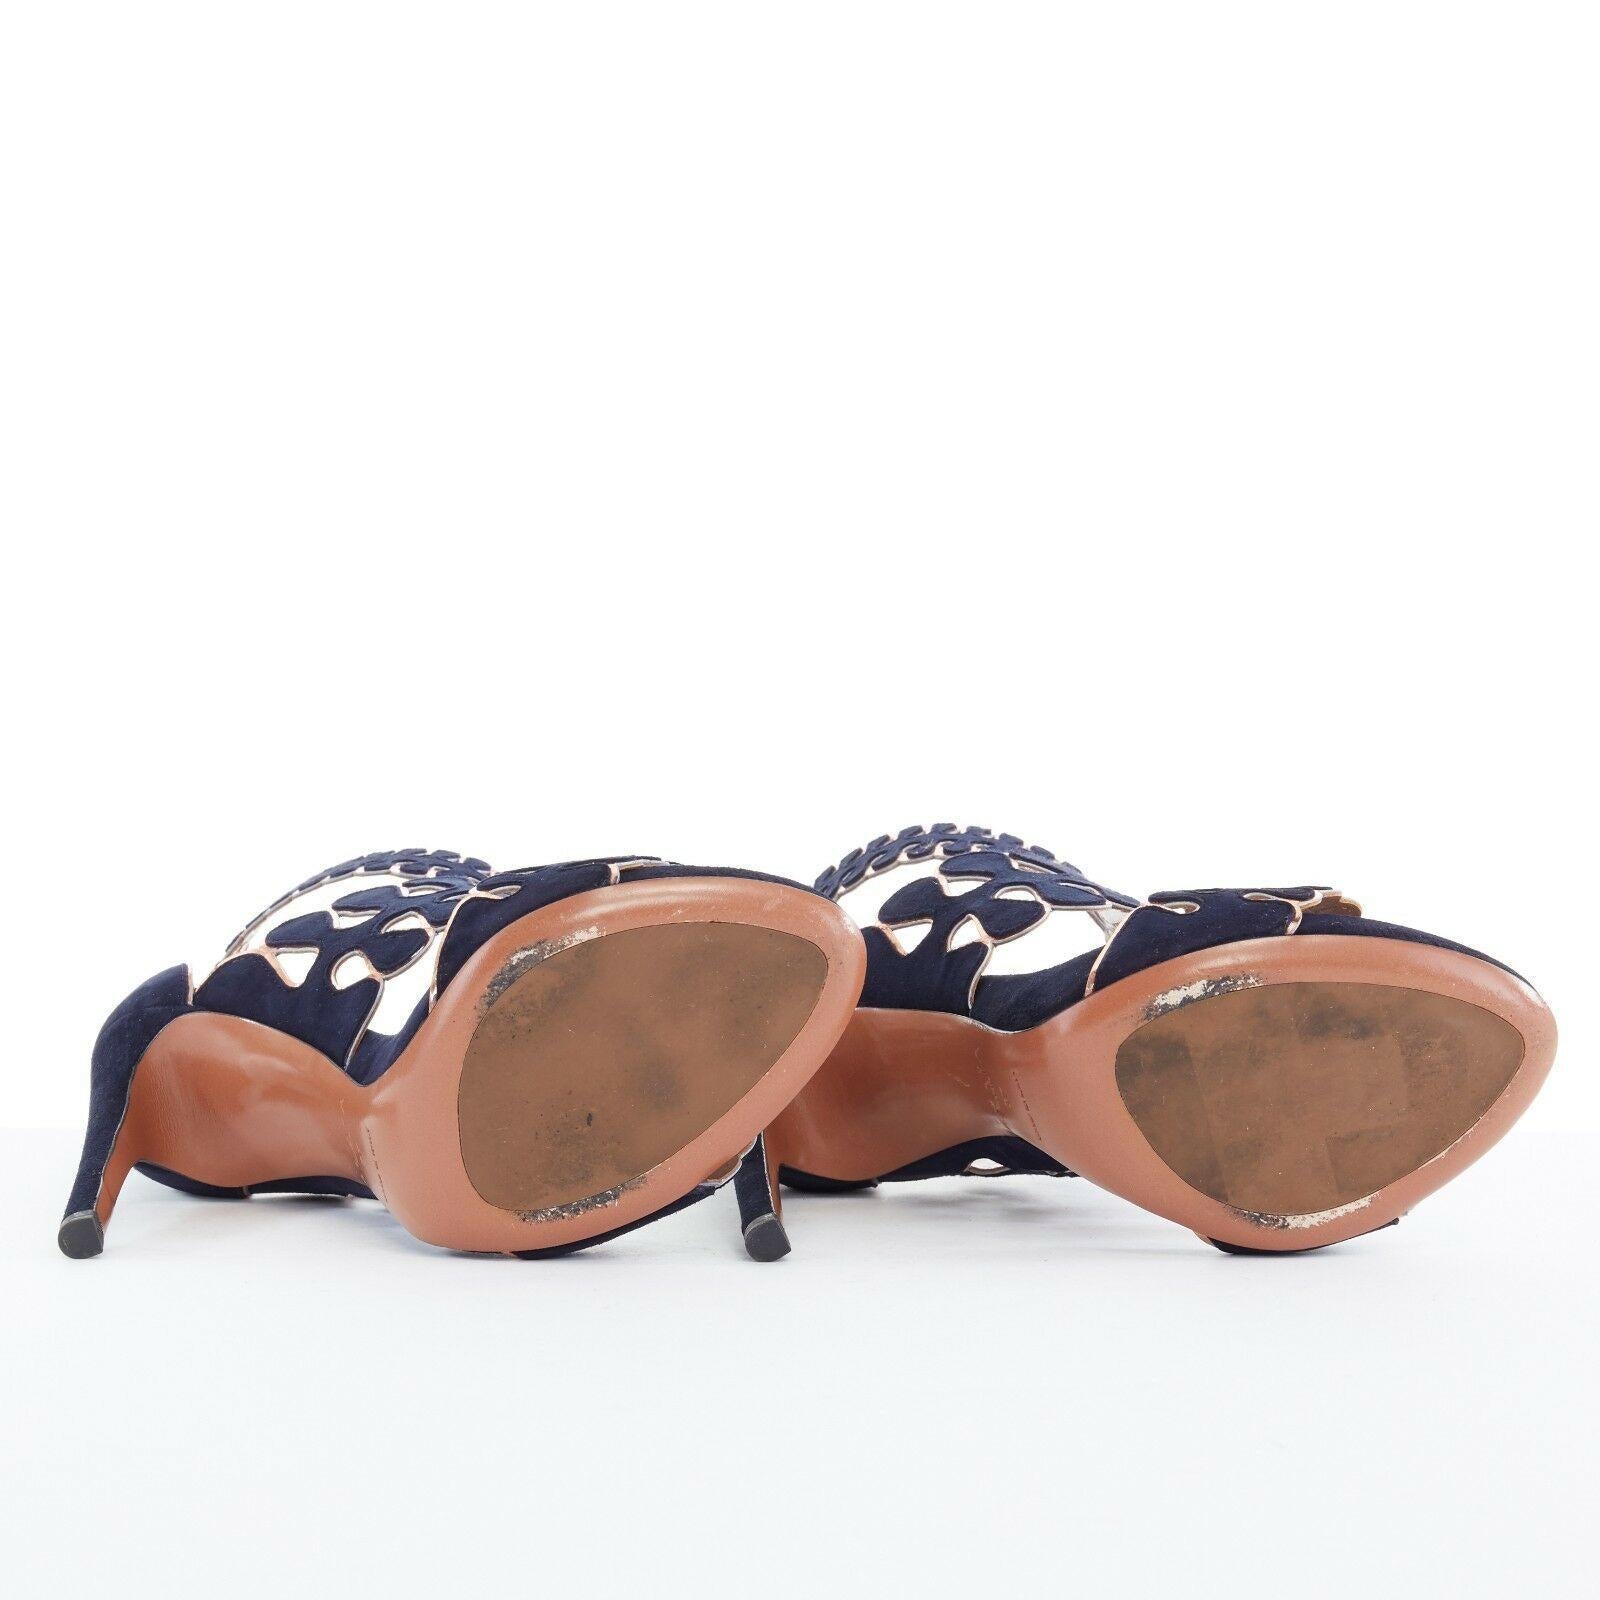 Black ALAIA navy blue suede copper trimmed squiggly open toe sandal heel EU37 US7 UK4